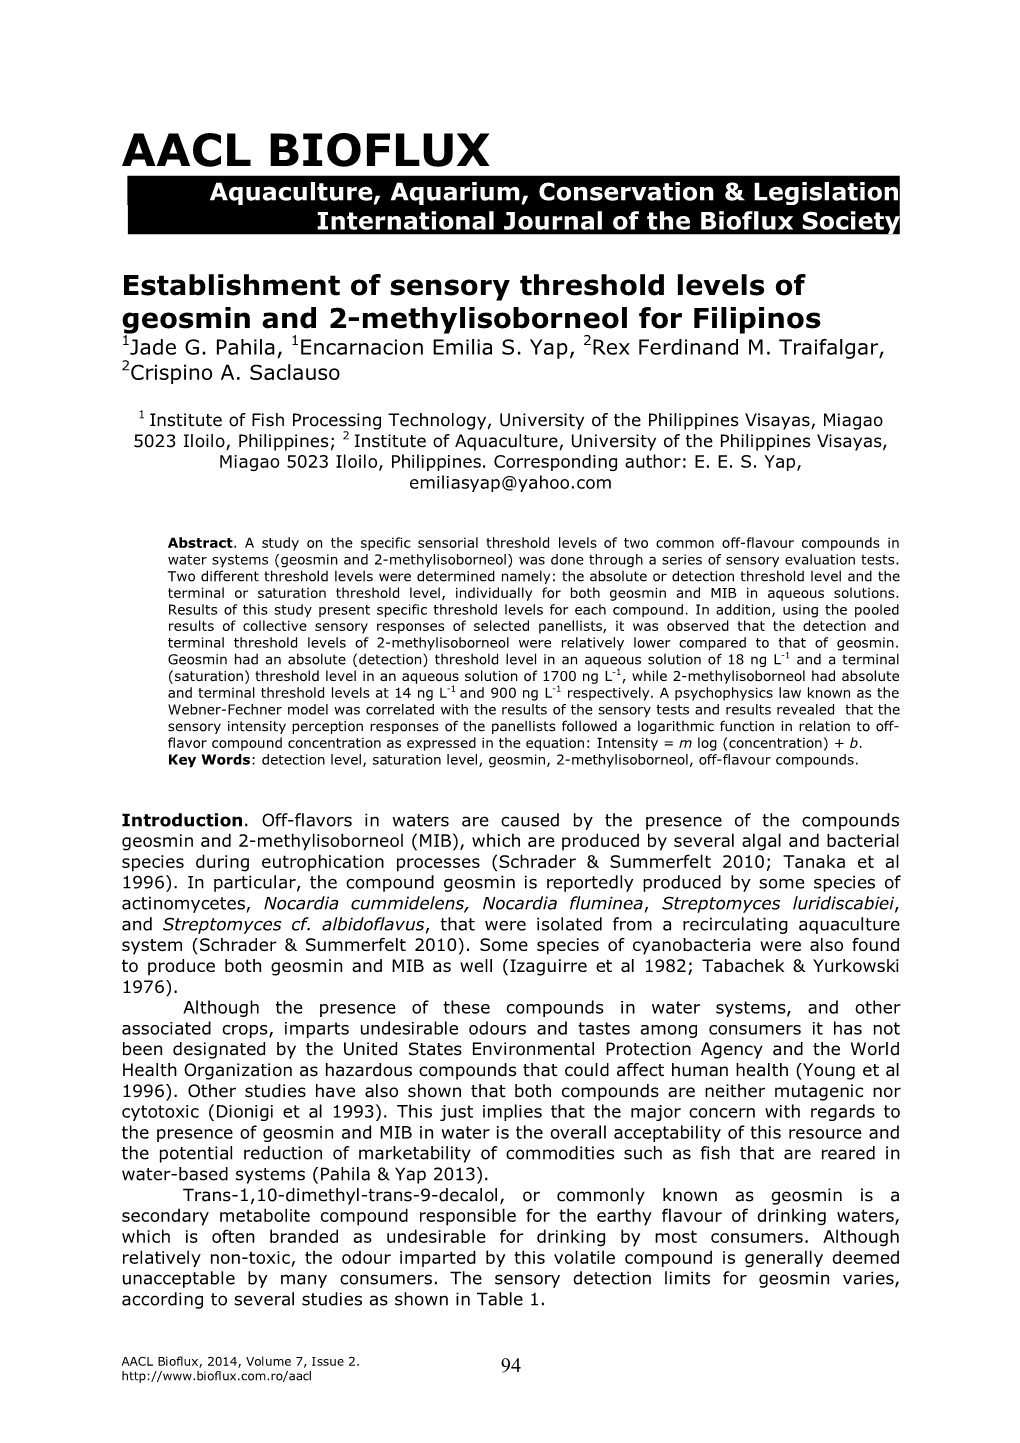 Pahila J. G., Yap E. E. S., Traifalgar R. F. M., Saclauso C. A., 2014 Establishment of Sensory Threshold Levels of Geosmin and 2-Methylisoborneol for Filipinos